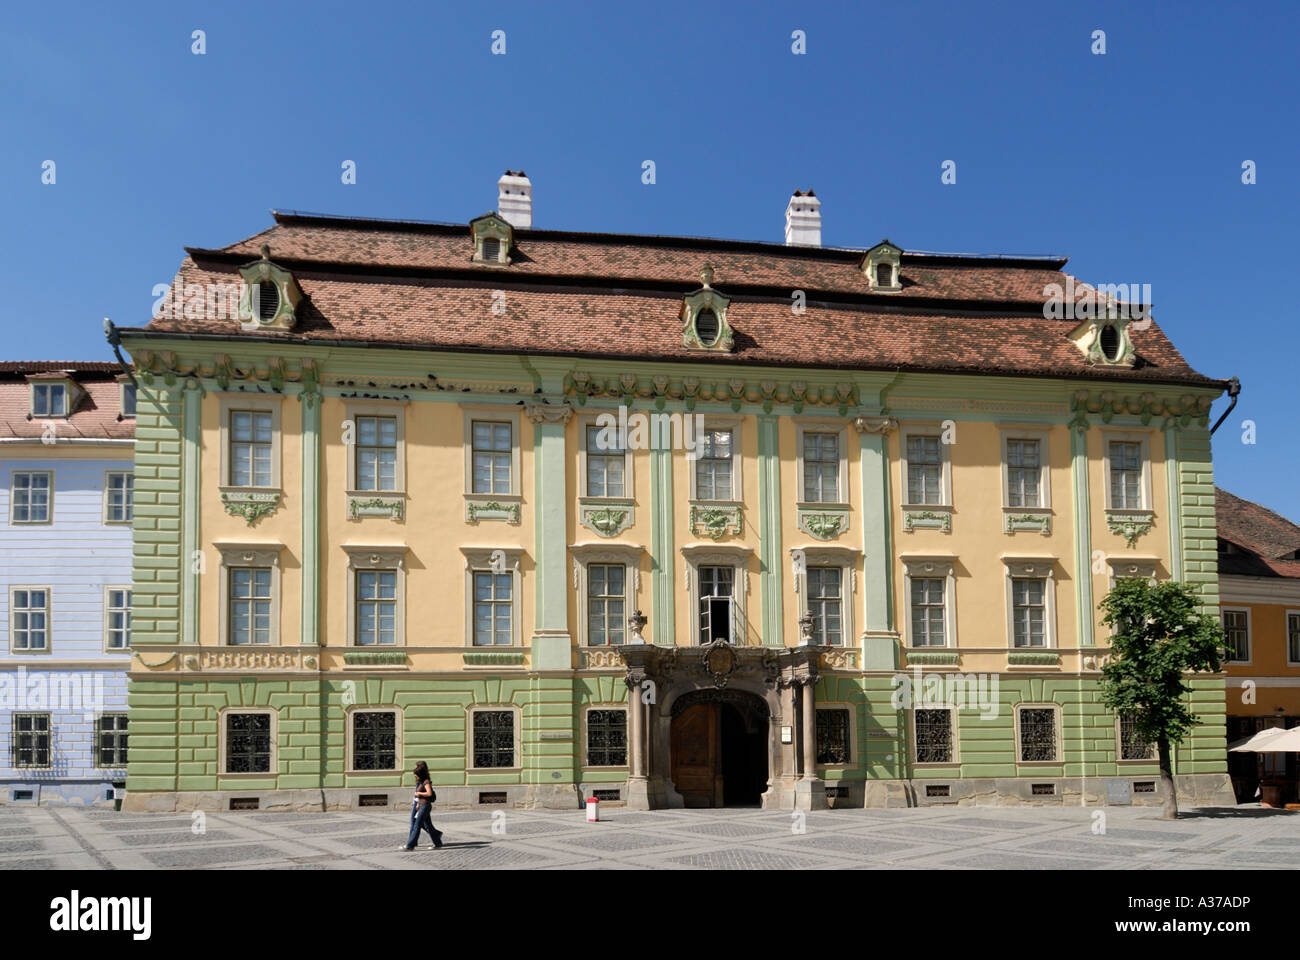 Le Palais Brukenthal (1788) style baroque tardif de Piata Mare, Sibiu, Roumanie Banque D'Images